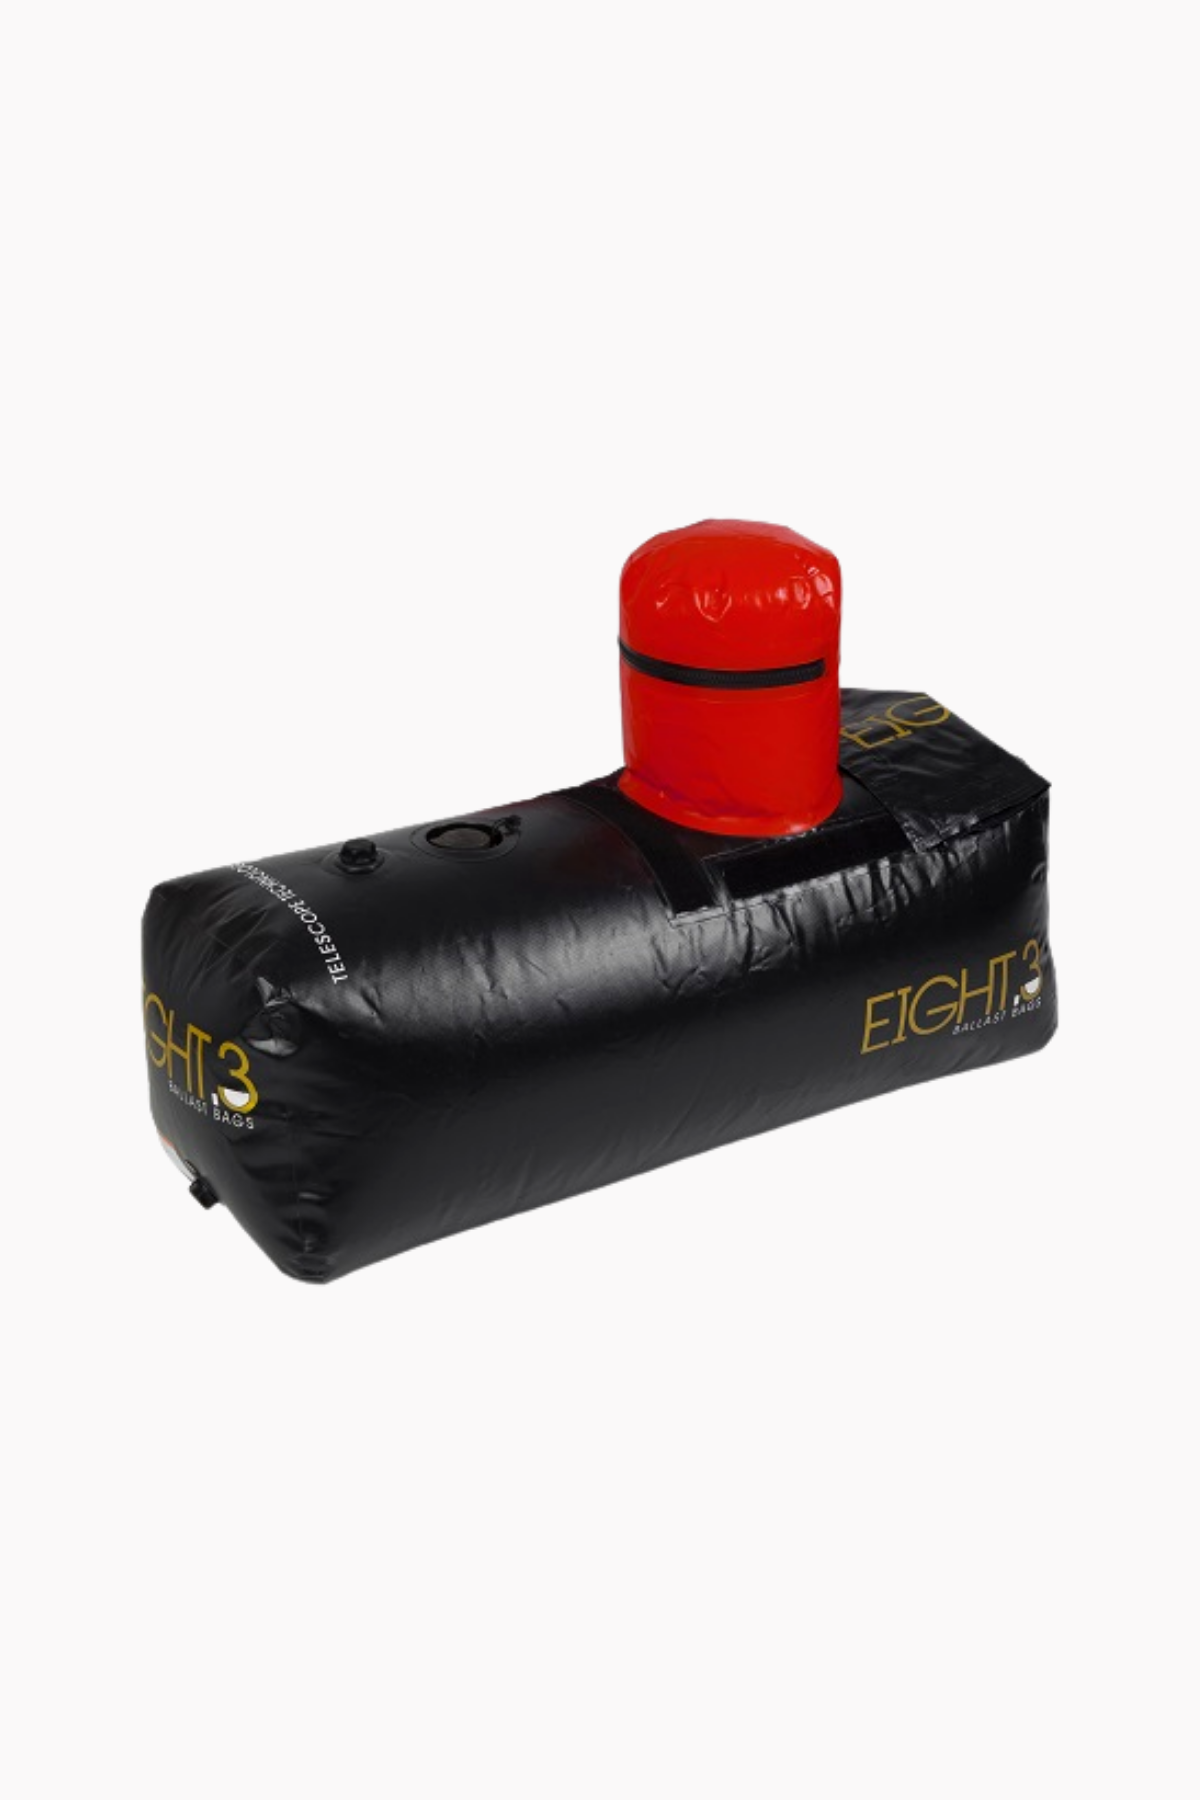 Ronix 8.3 Telescoping Ballast Bags - Cottage Toys - Peterborough - Ontario - Canada